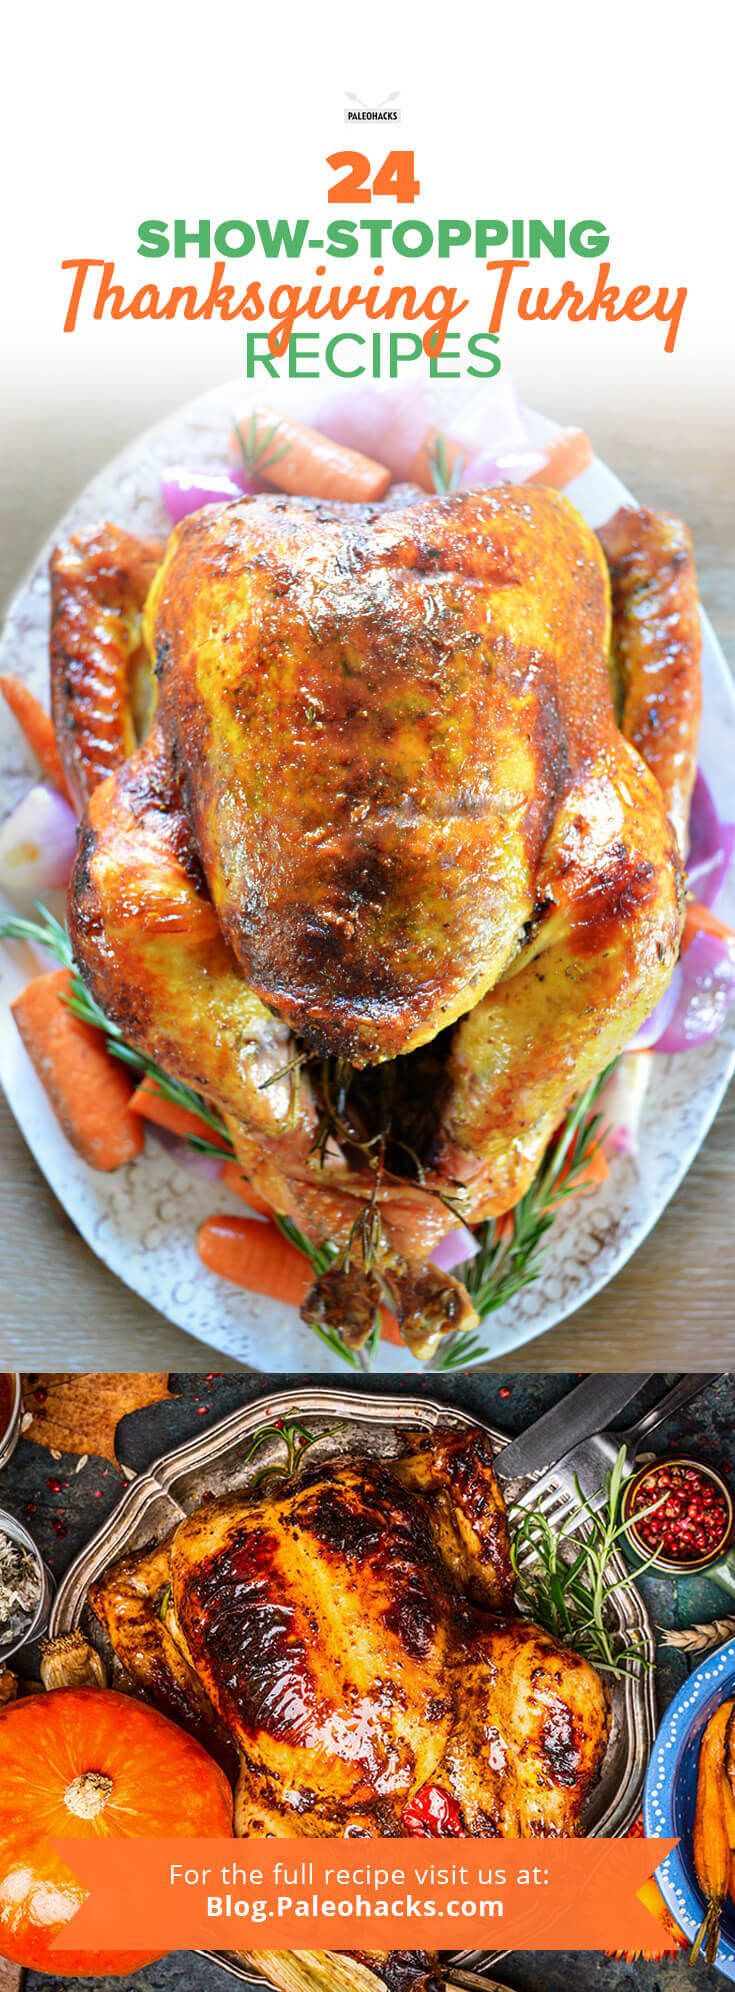 thanksgiving turkey recipes pin